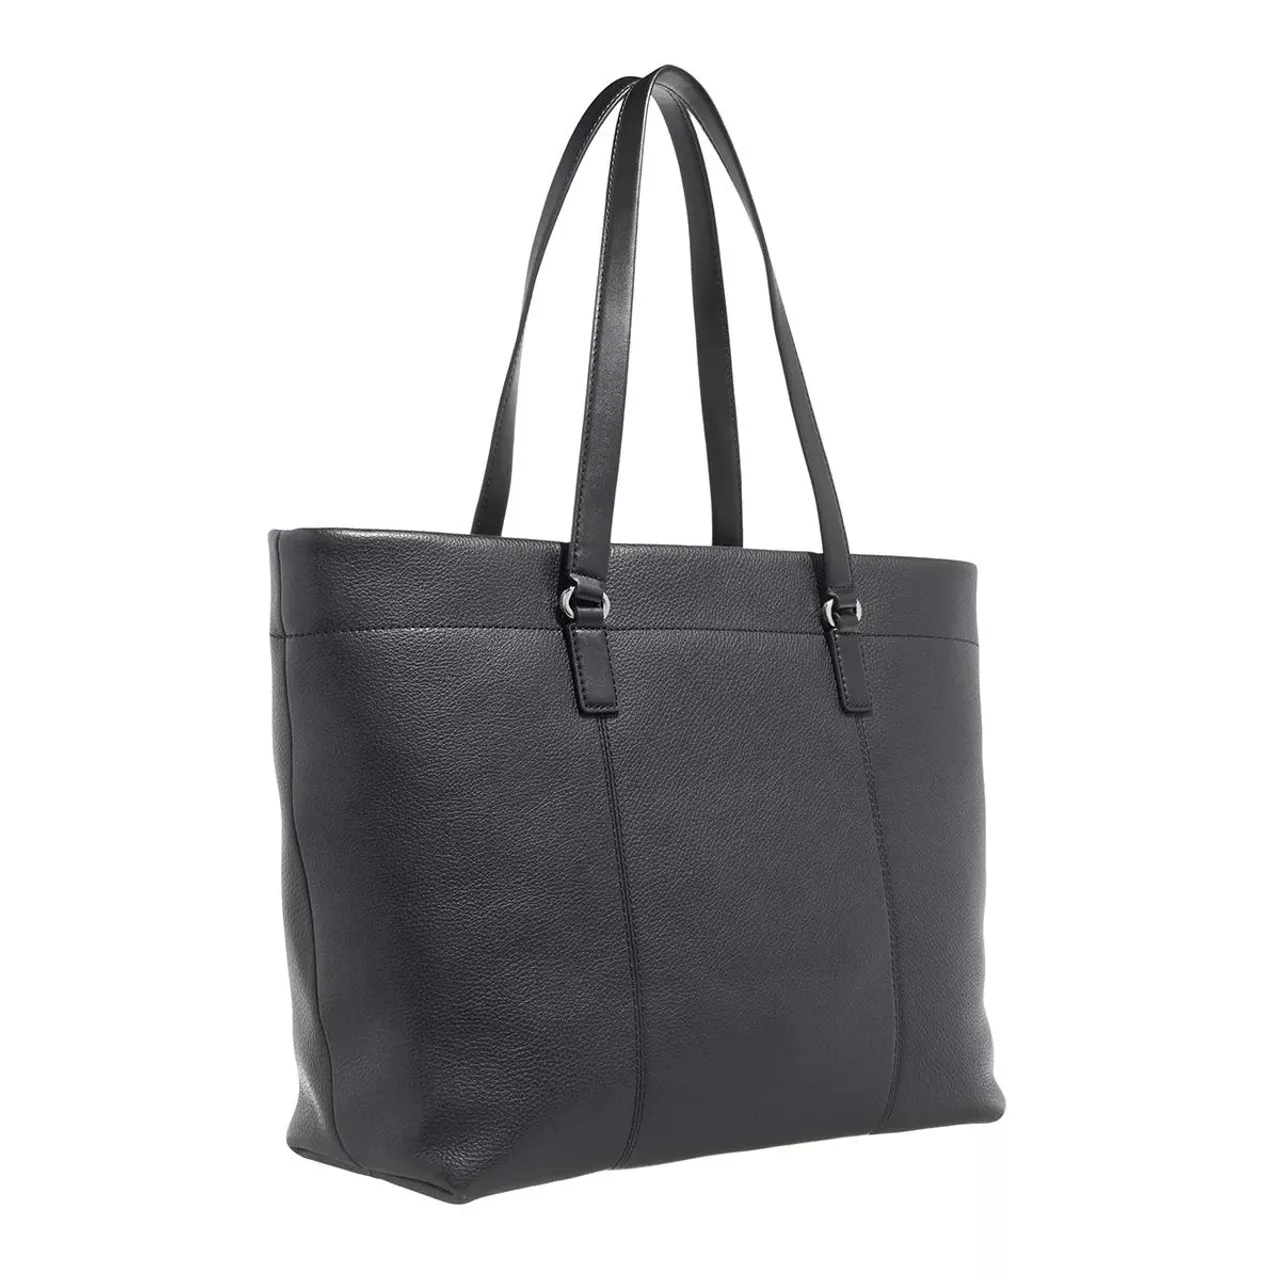 Michael Kors Tote Bags - Slater Large Top-Zip Tote - black - Tote Bags for ladies